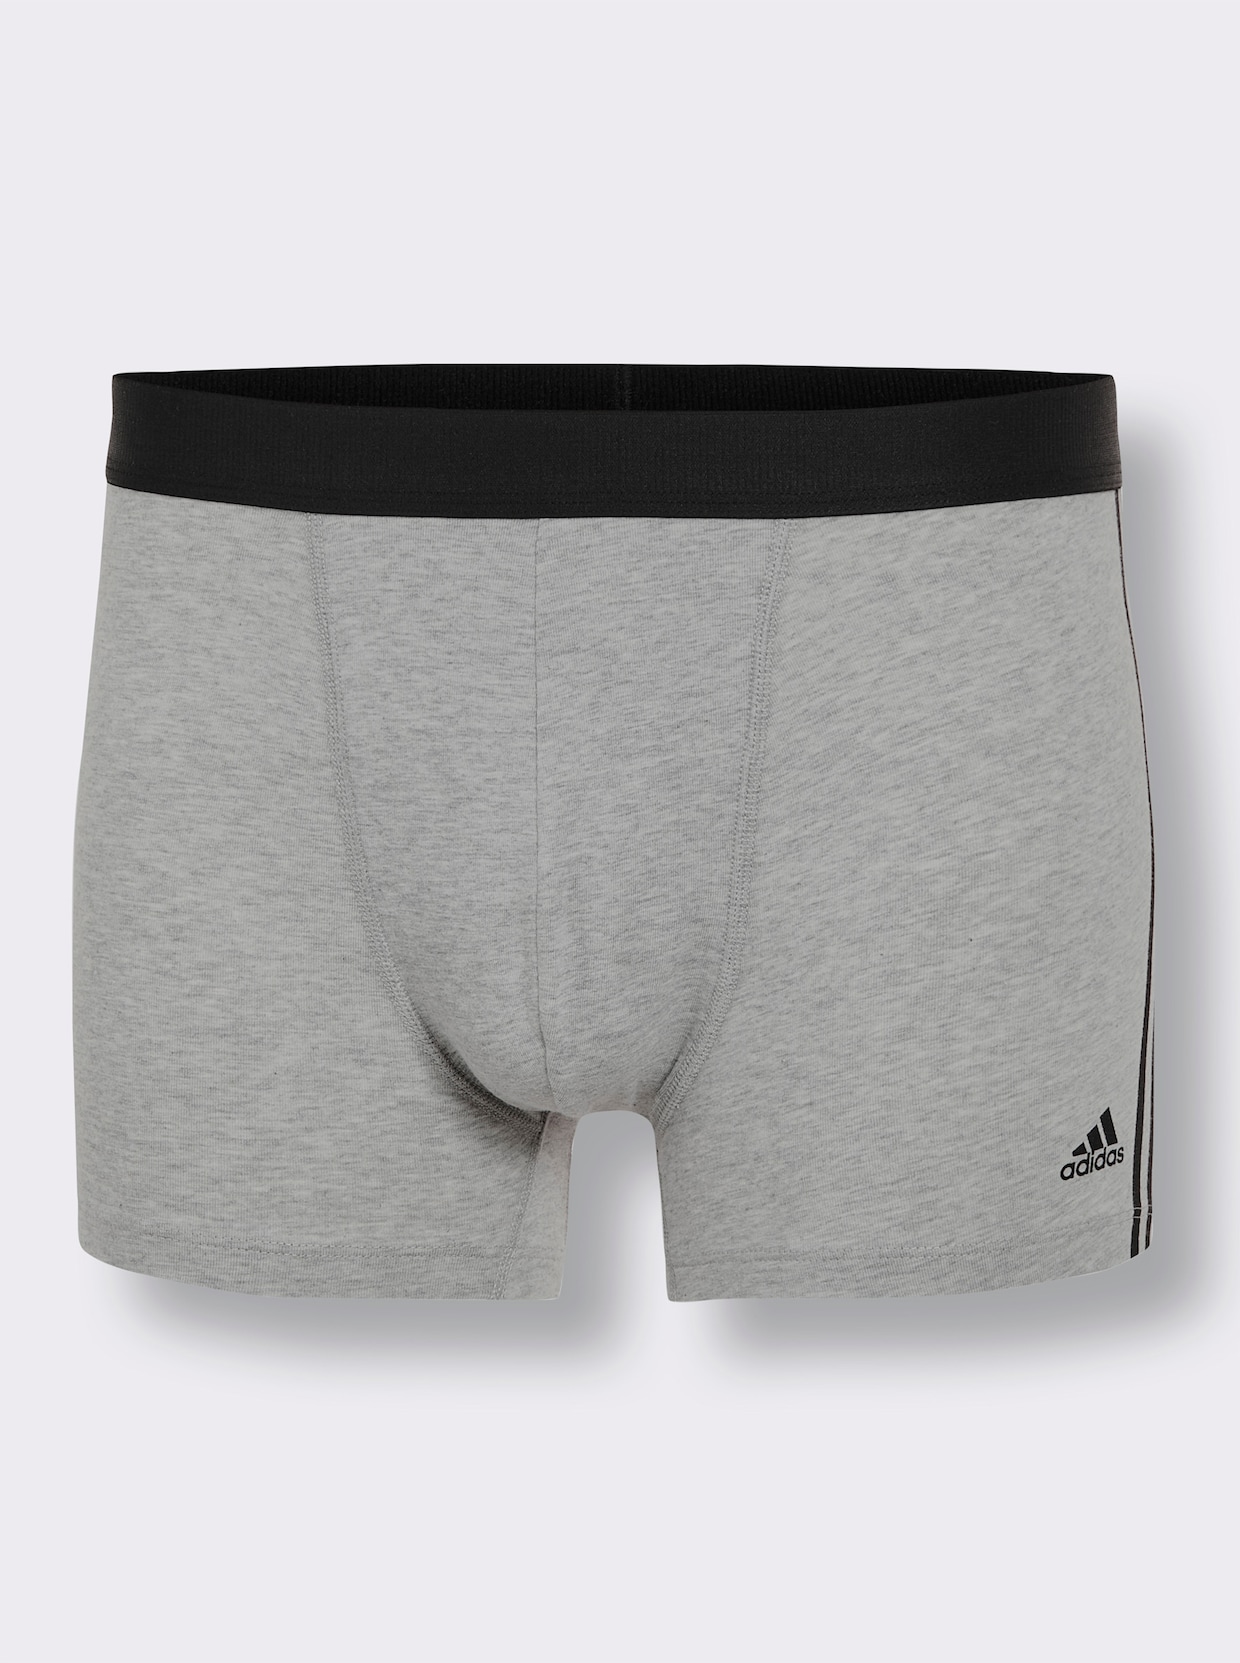 Adidas Pants - weiß + grau + schwarz